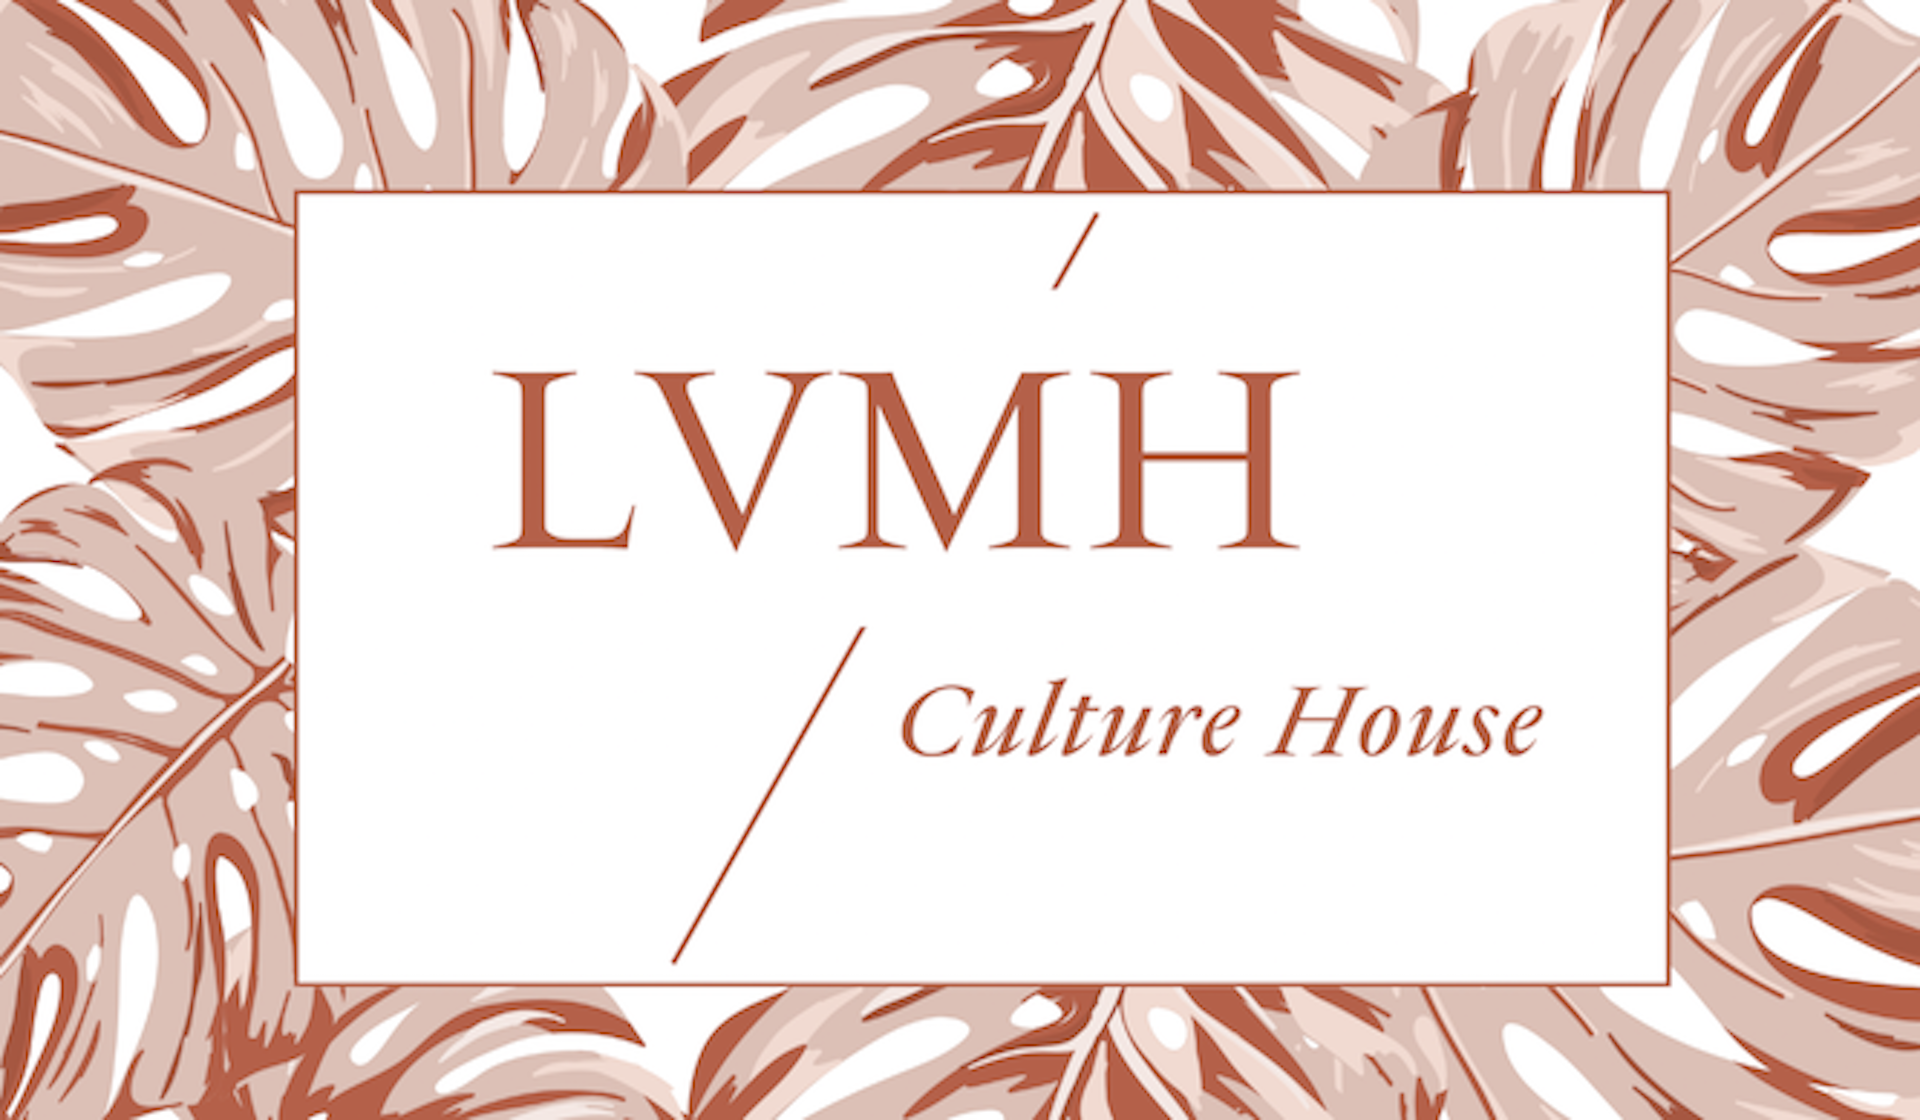 LVMH Culture House Panels